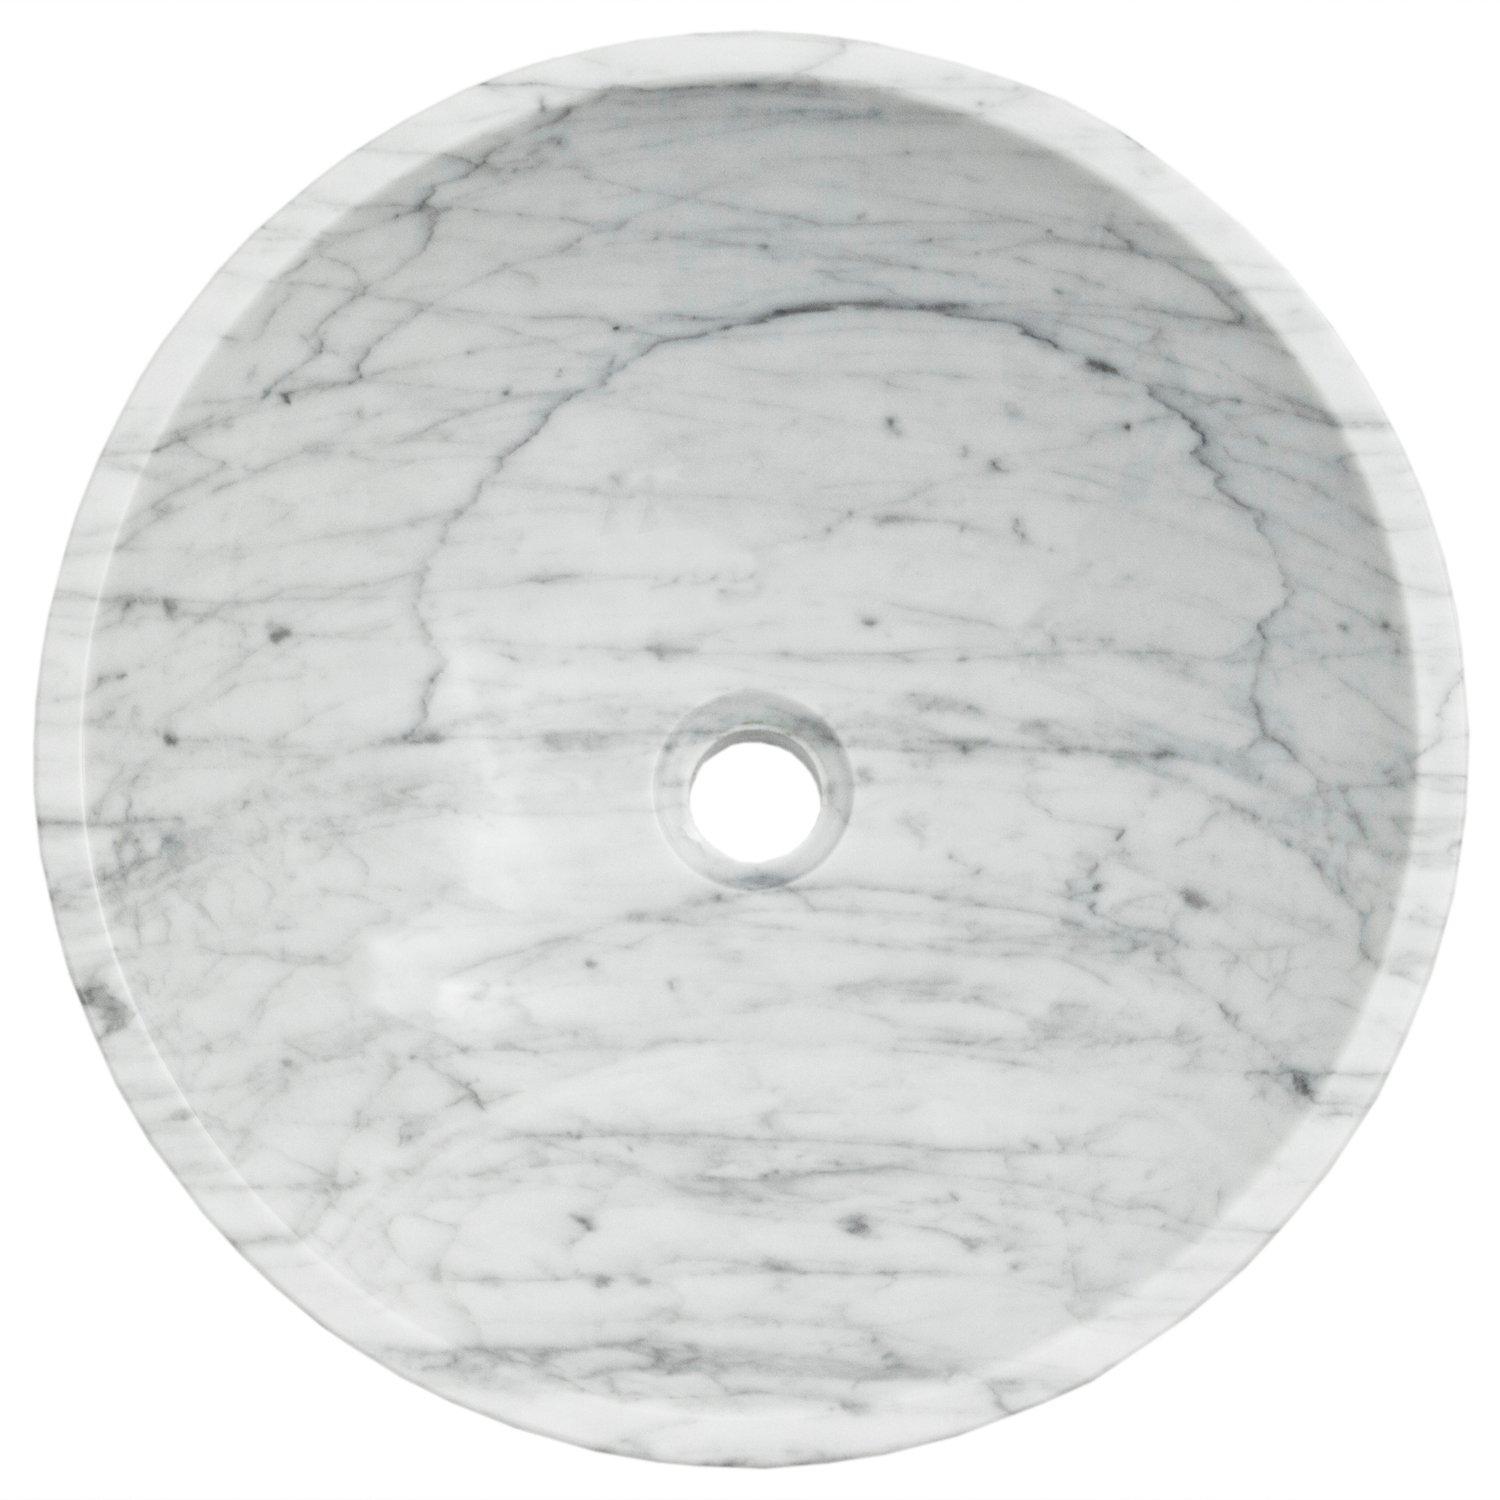 Carrara White Polished Marble Sink